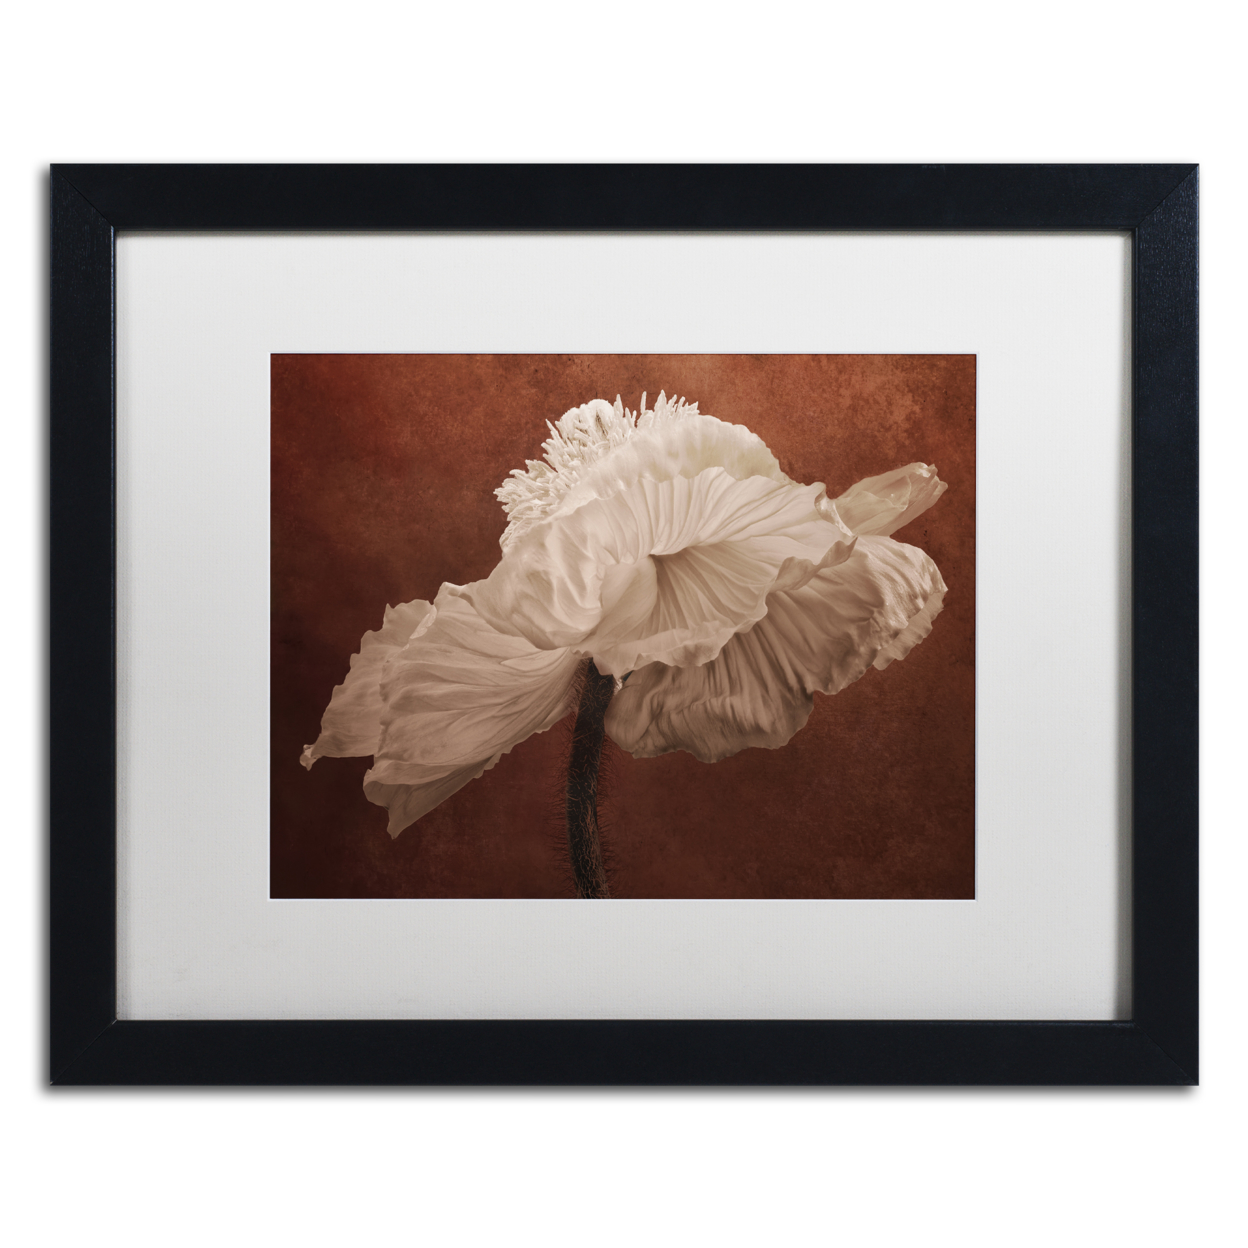 Cora Niele 'White Poppy' Black Wooden Framed Art 18 X 22 Inches